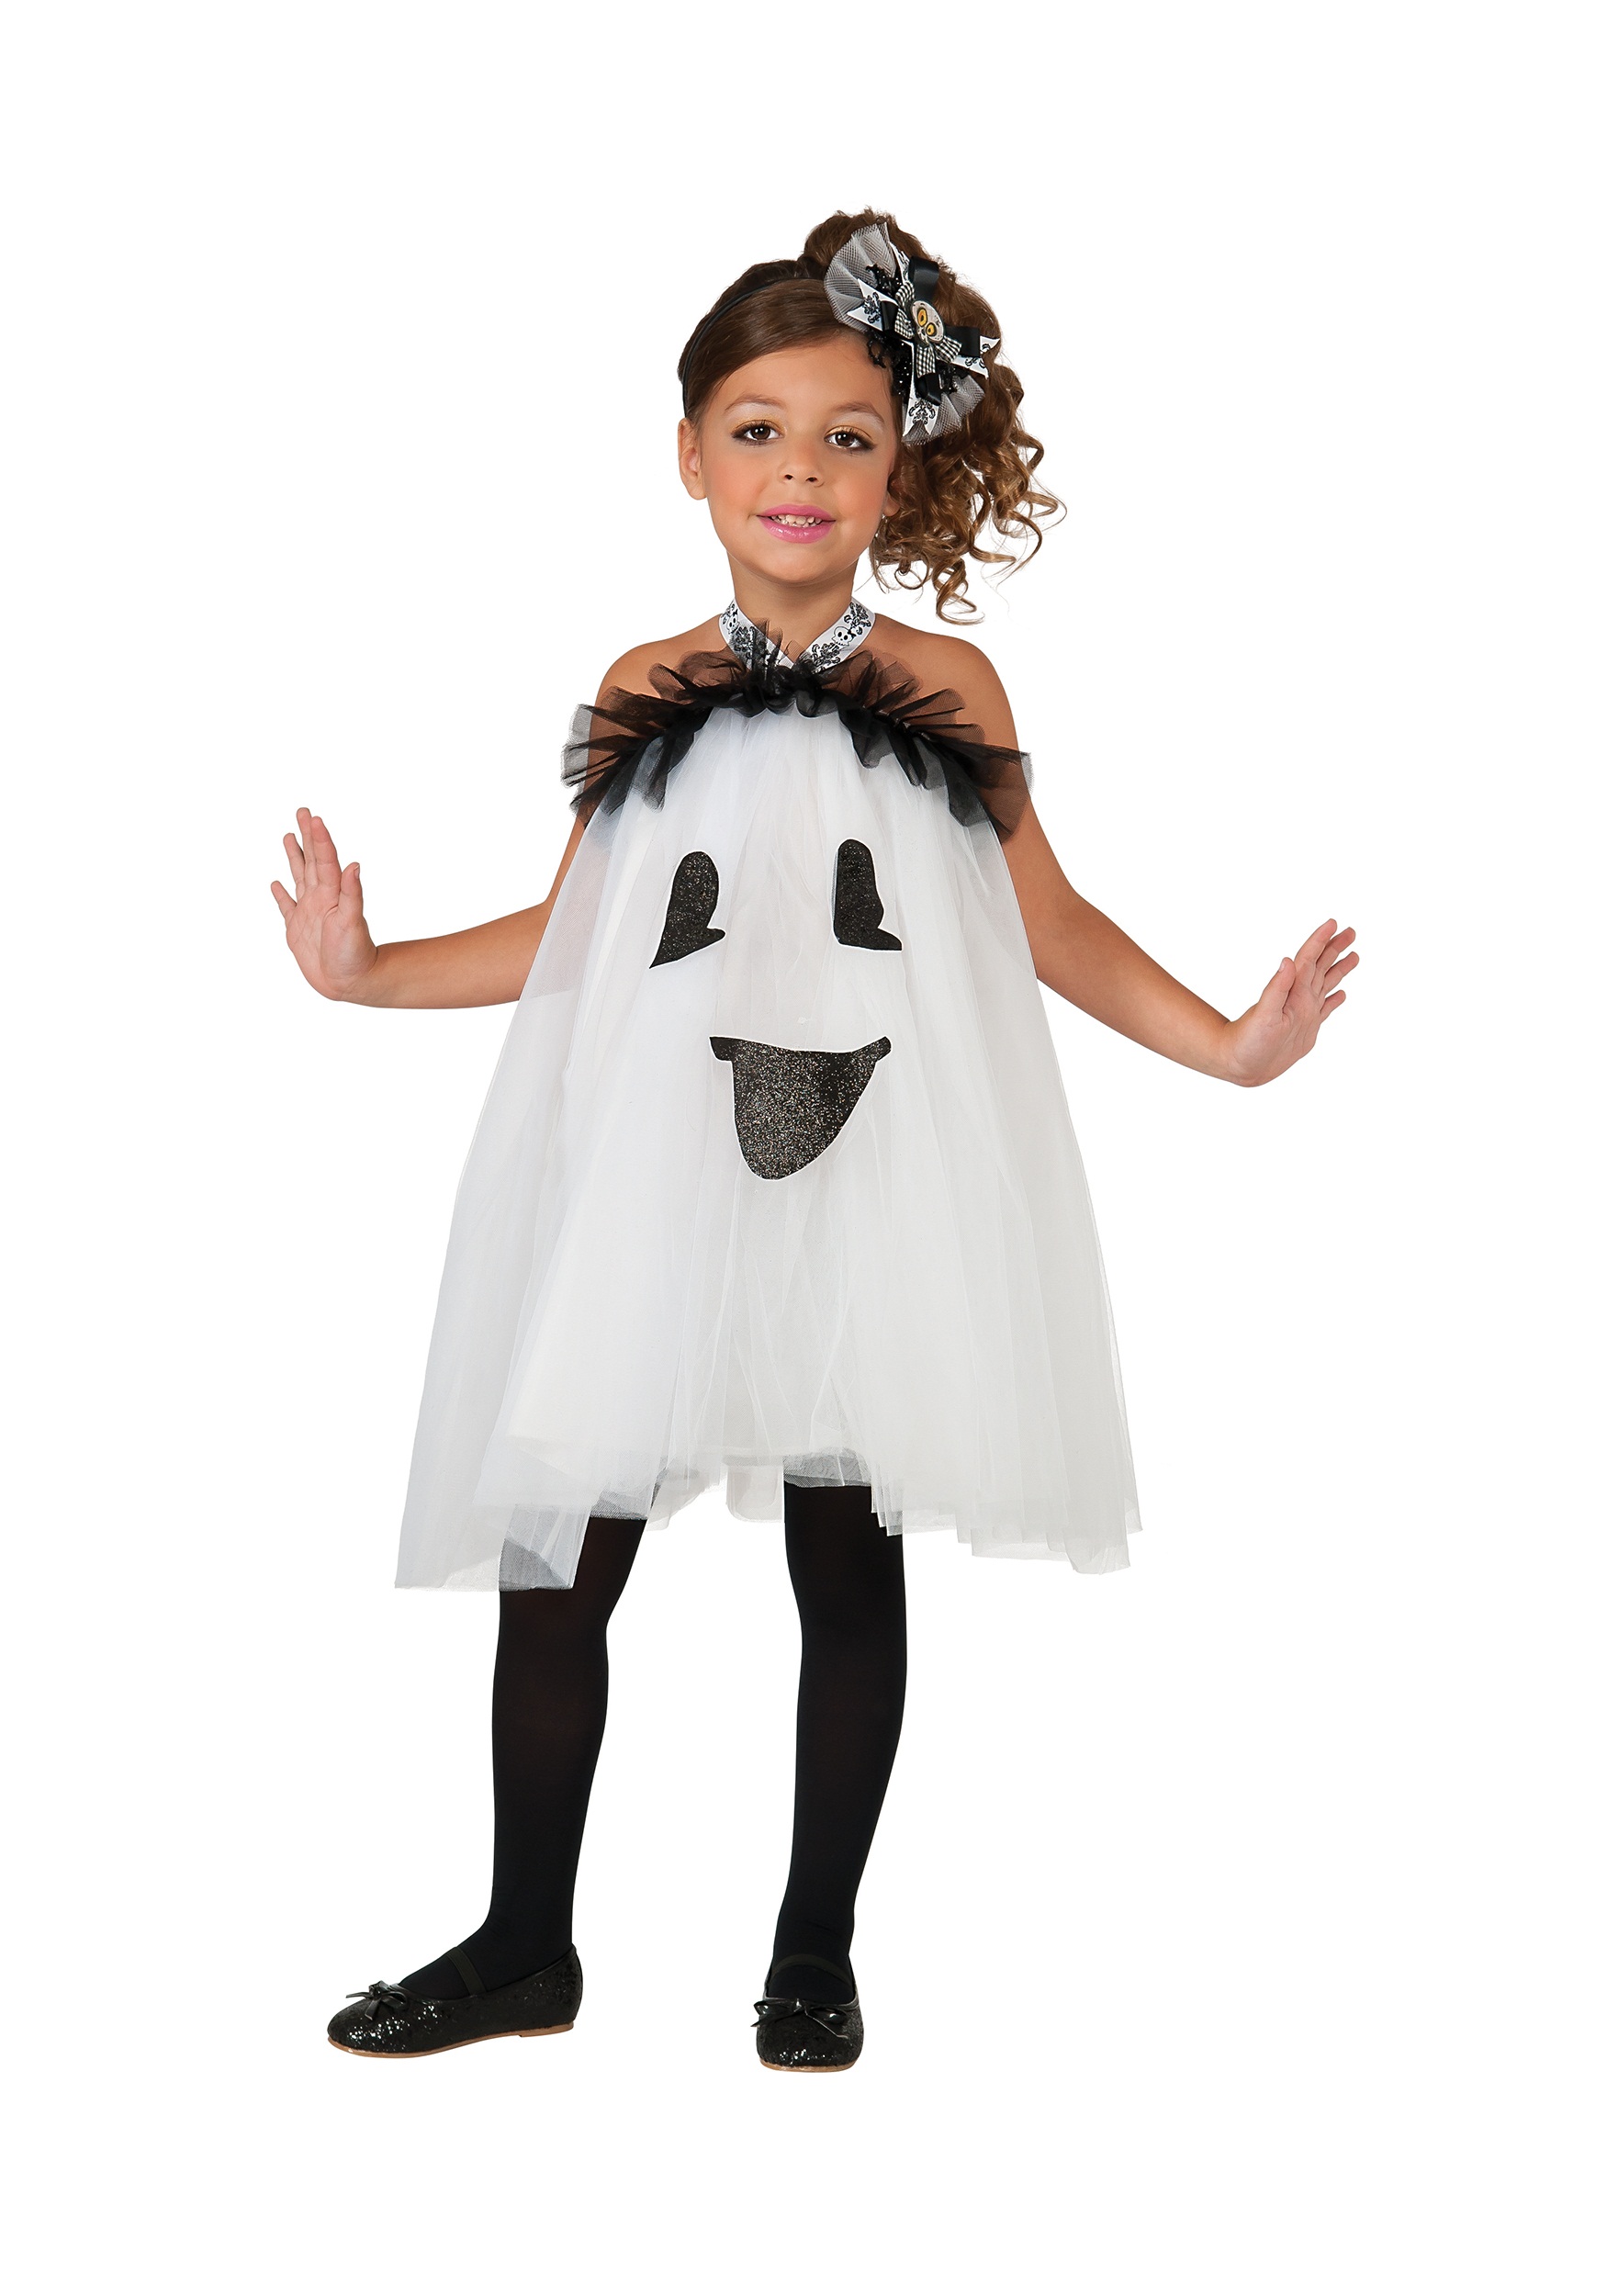 Photos - Fancy Dress Rubies Ghost Tutu Girl's Costume Dress Black/White 